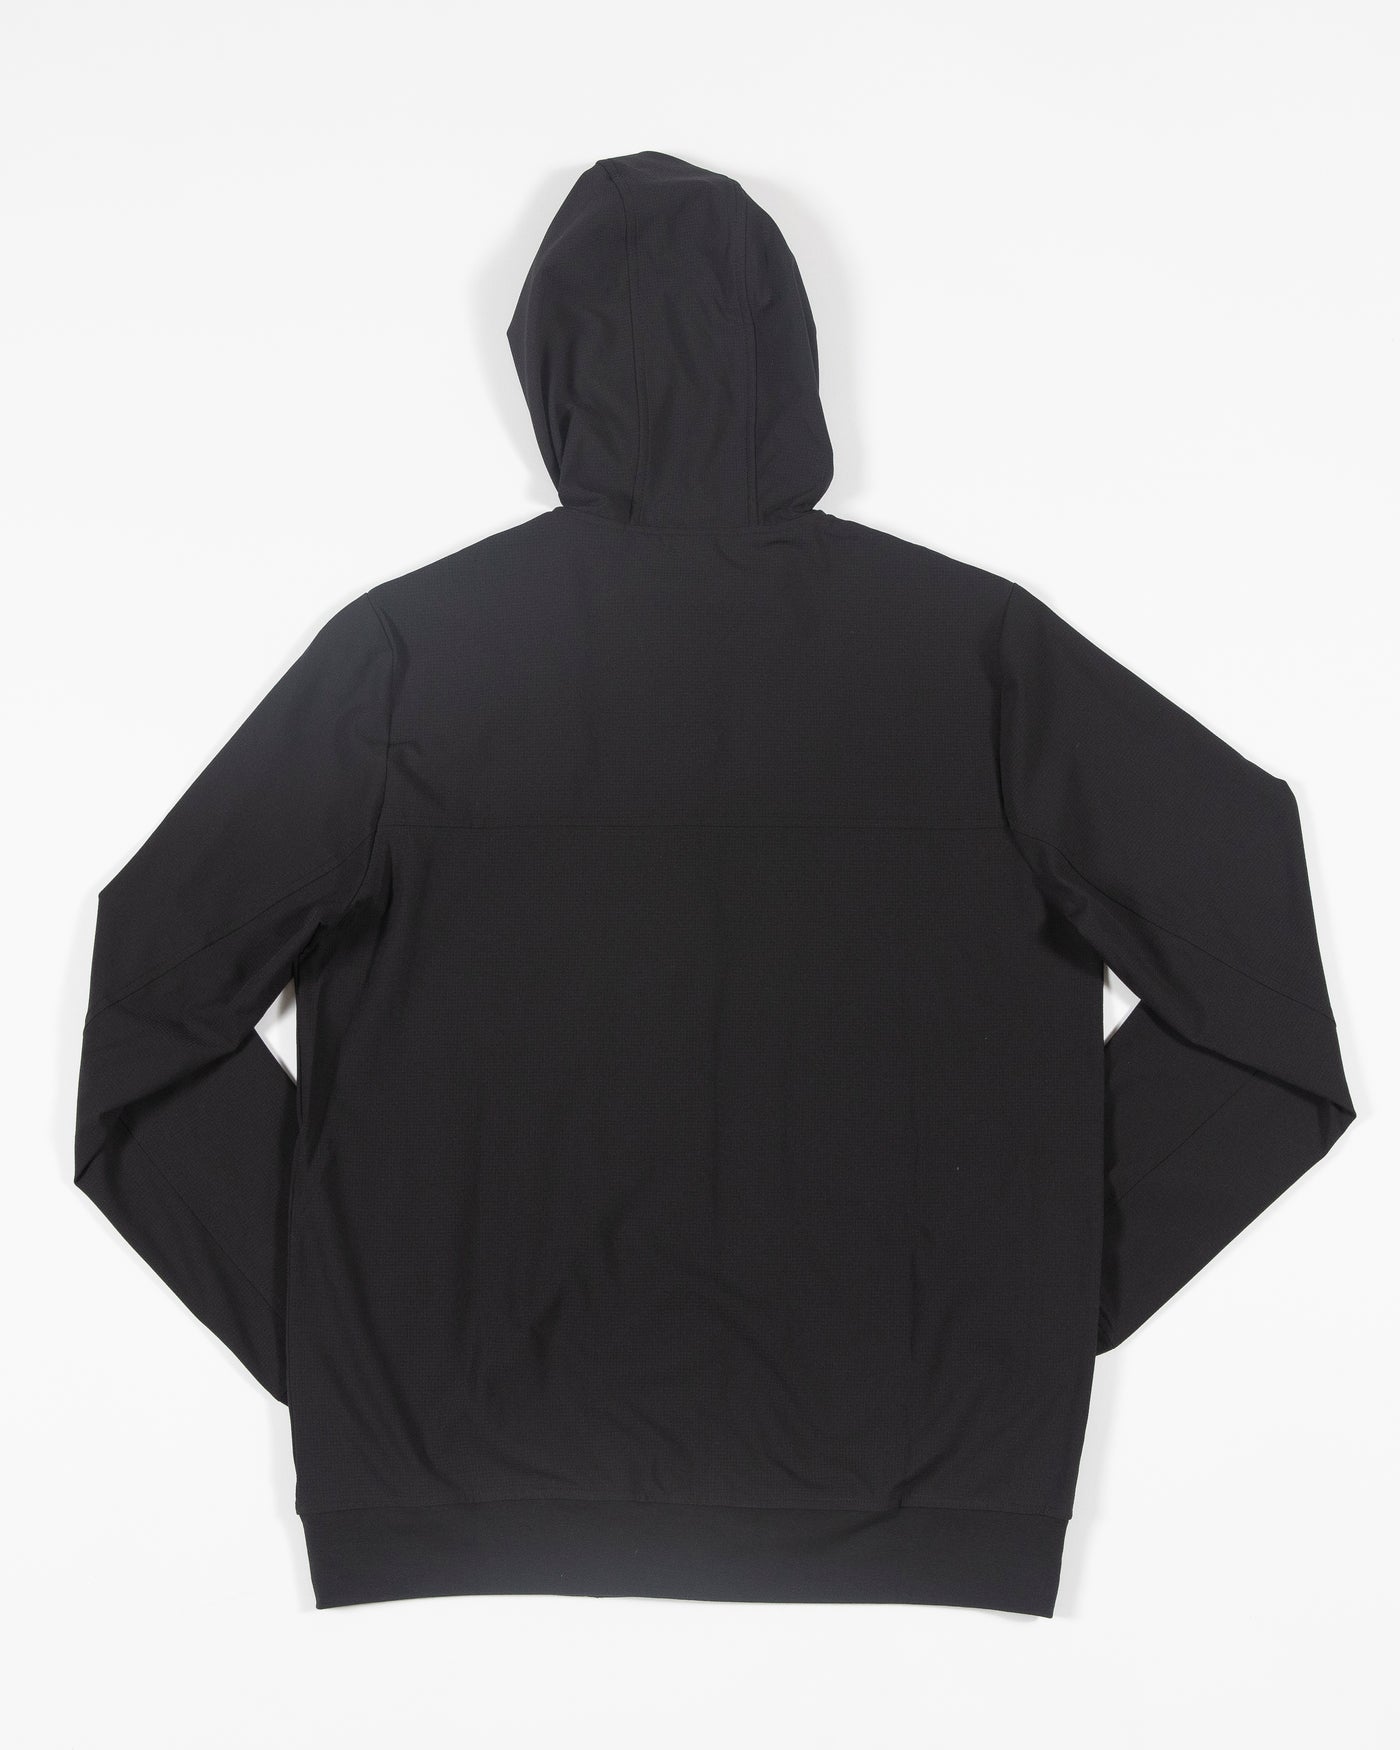 black TravisMathew zip up hoodie with embroidered Chicago Blackhawks primary logo on left shoulder - back lay flat